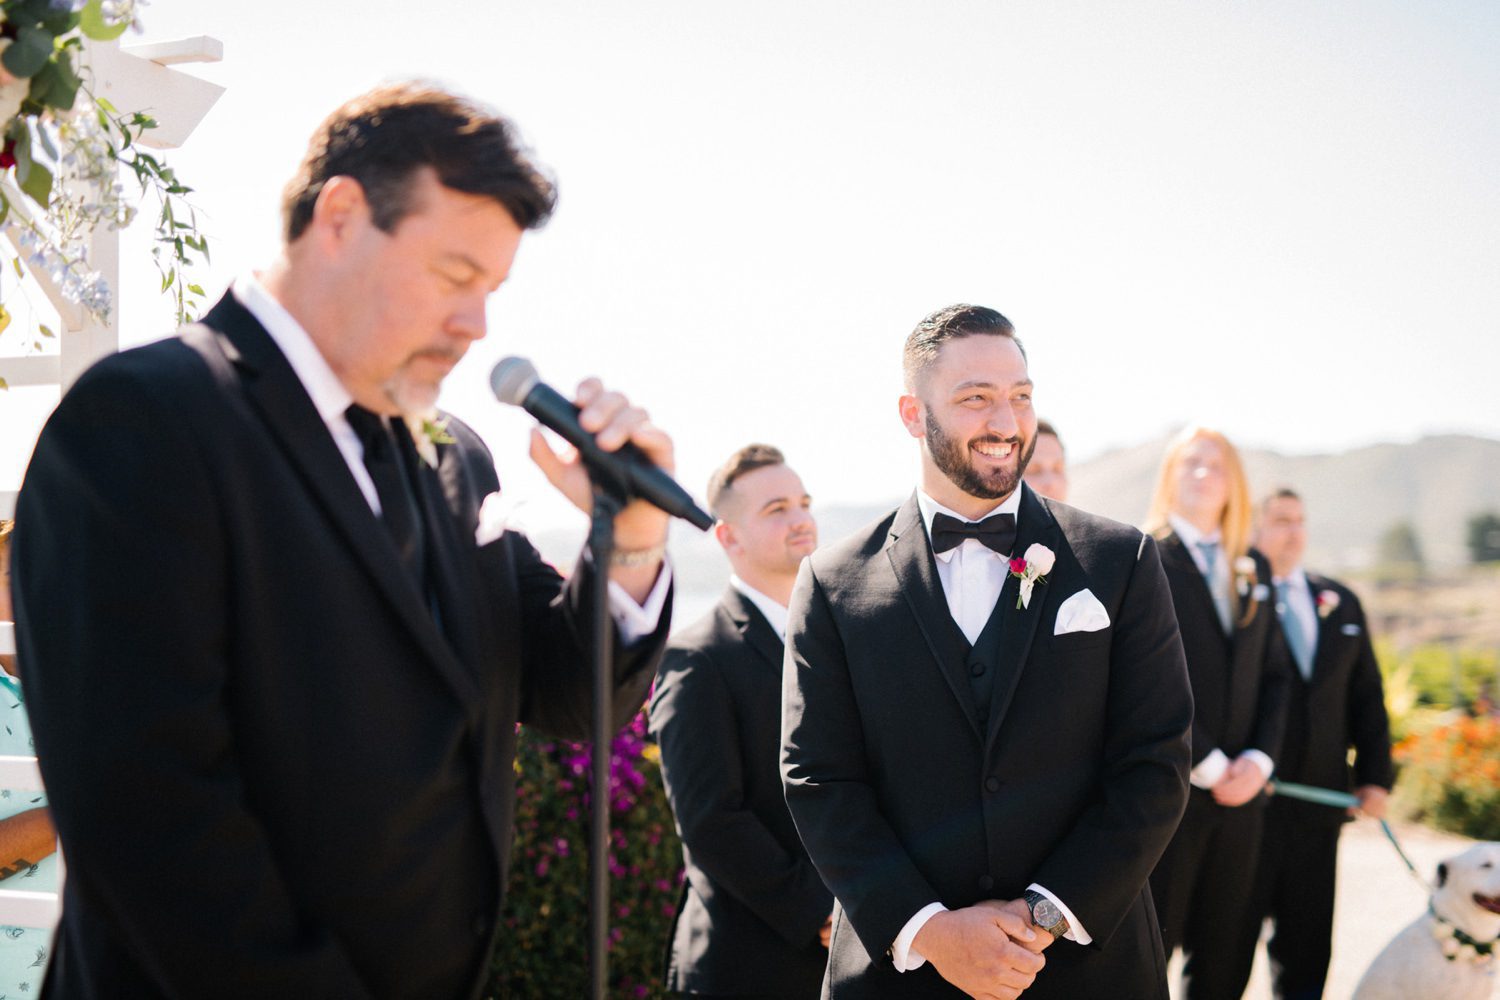 Groom smiling during ceremony at Cliffs Hotel Wedding by Central Coast Wedding Photographer Austyn Elizabeth Photography